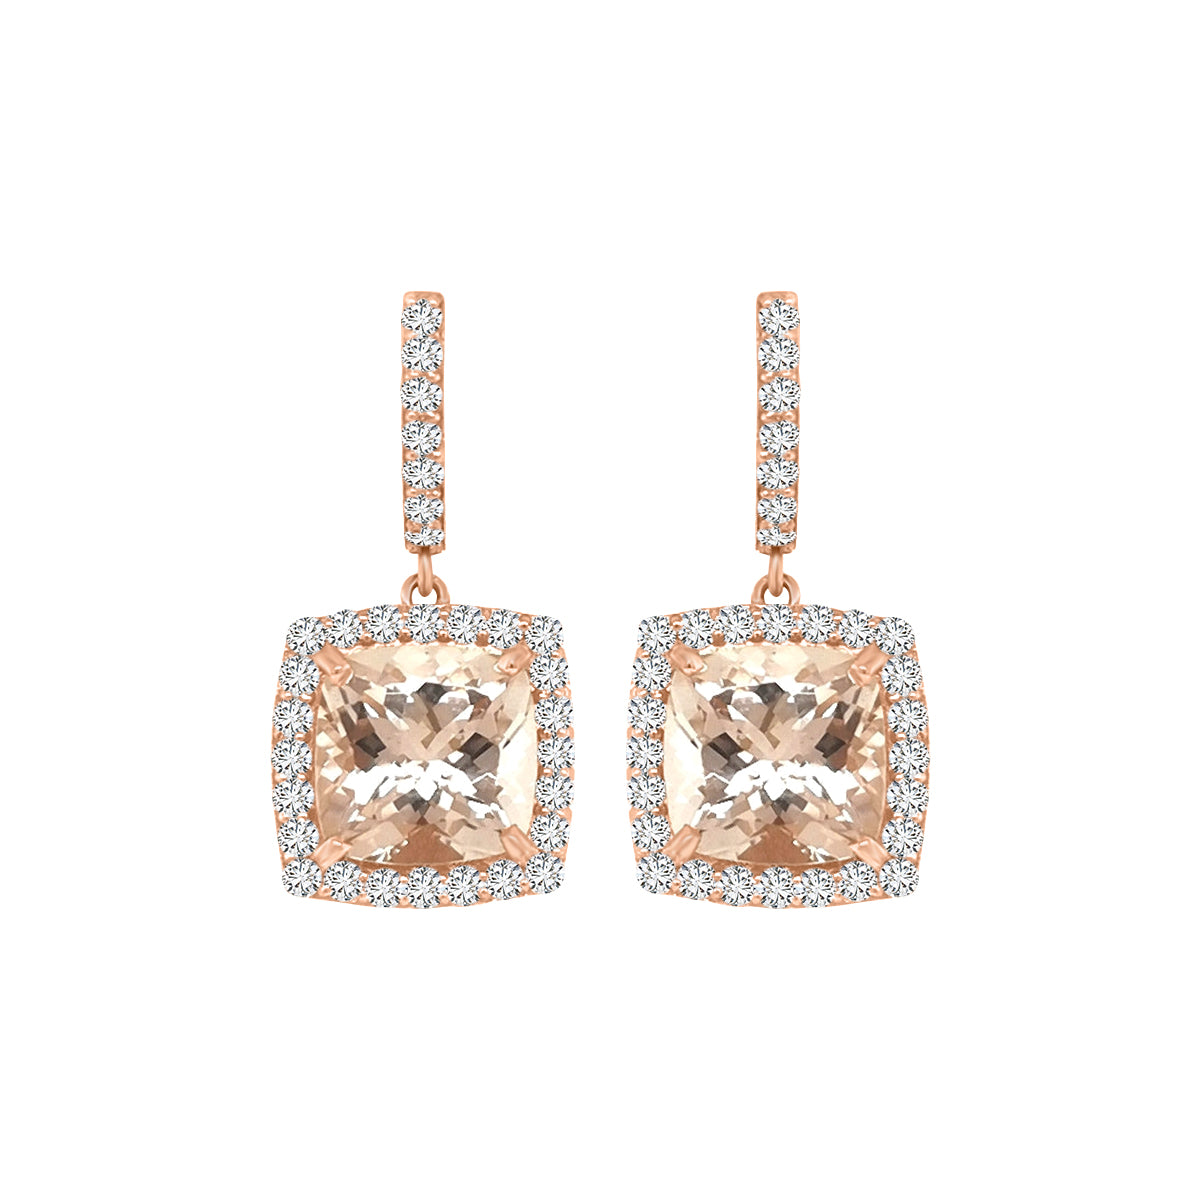 Morganite And Diamond Earrings In 18k Rose Gold.